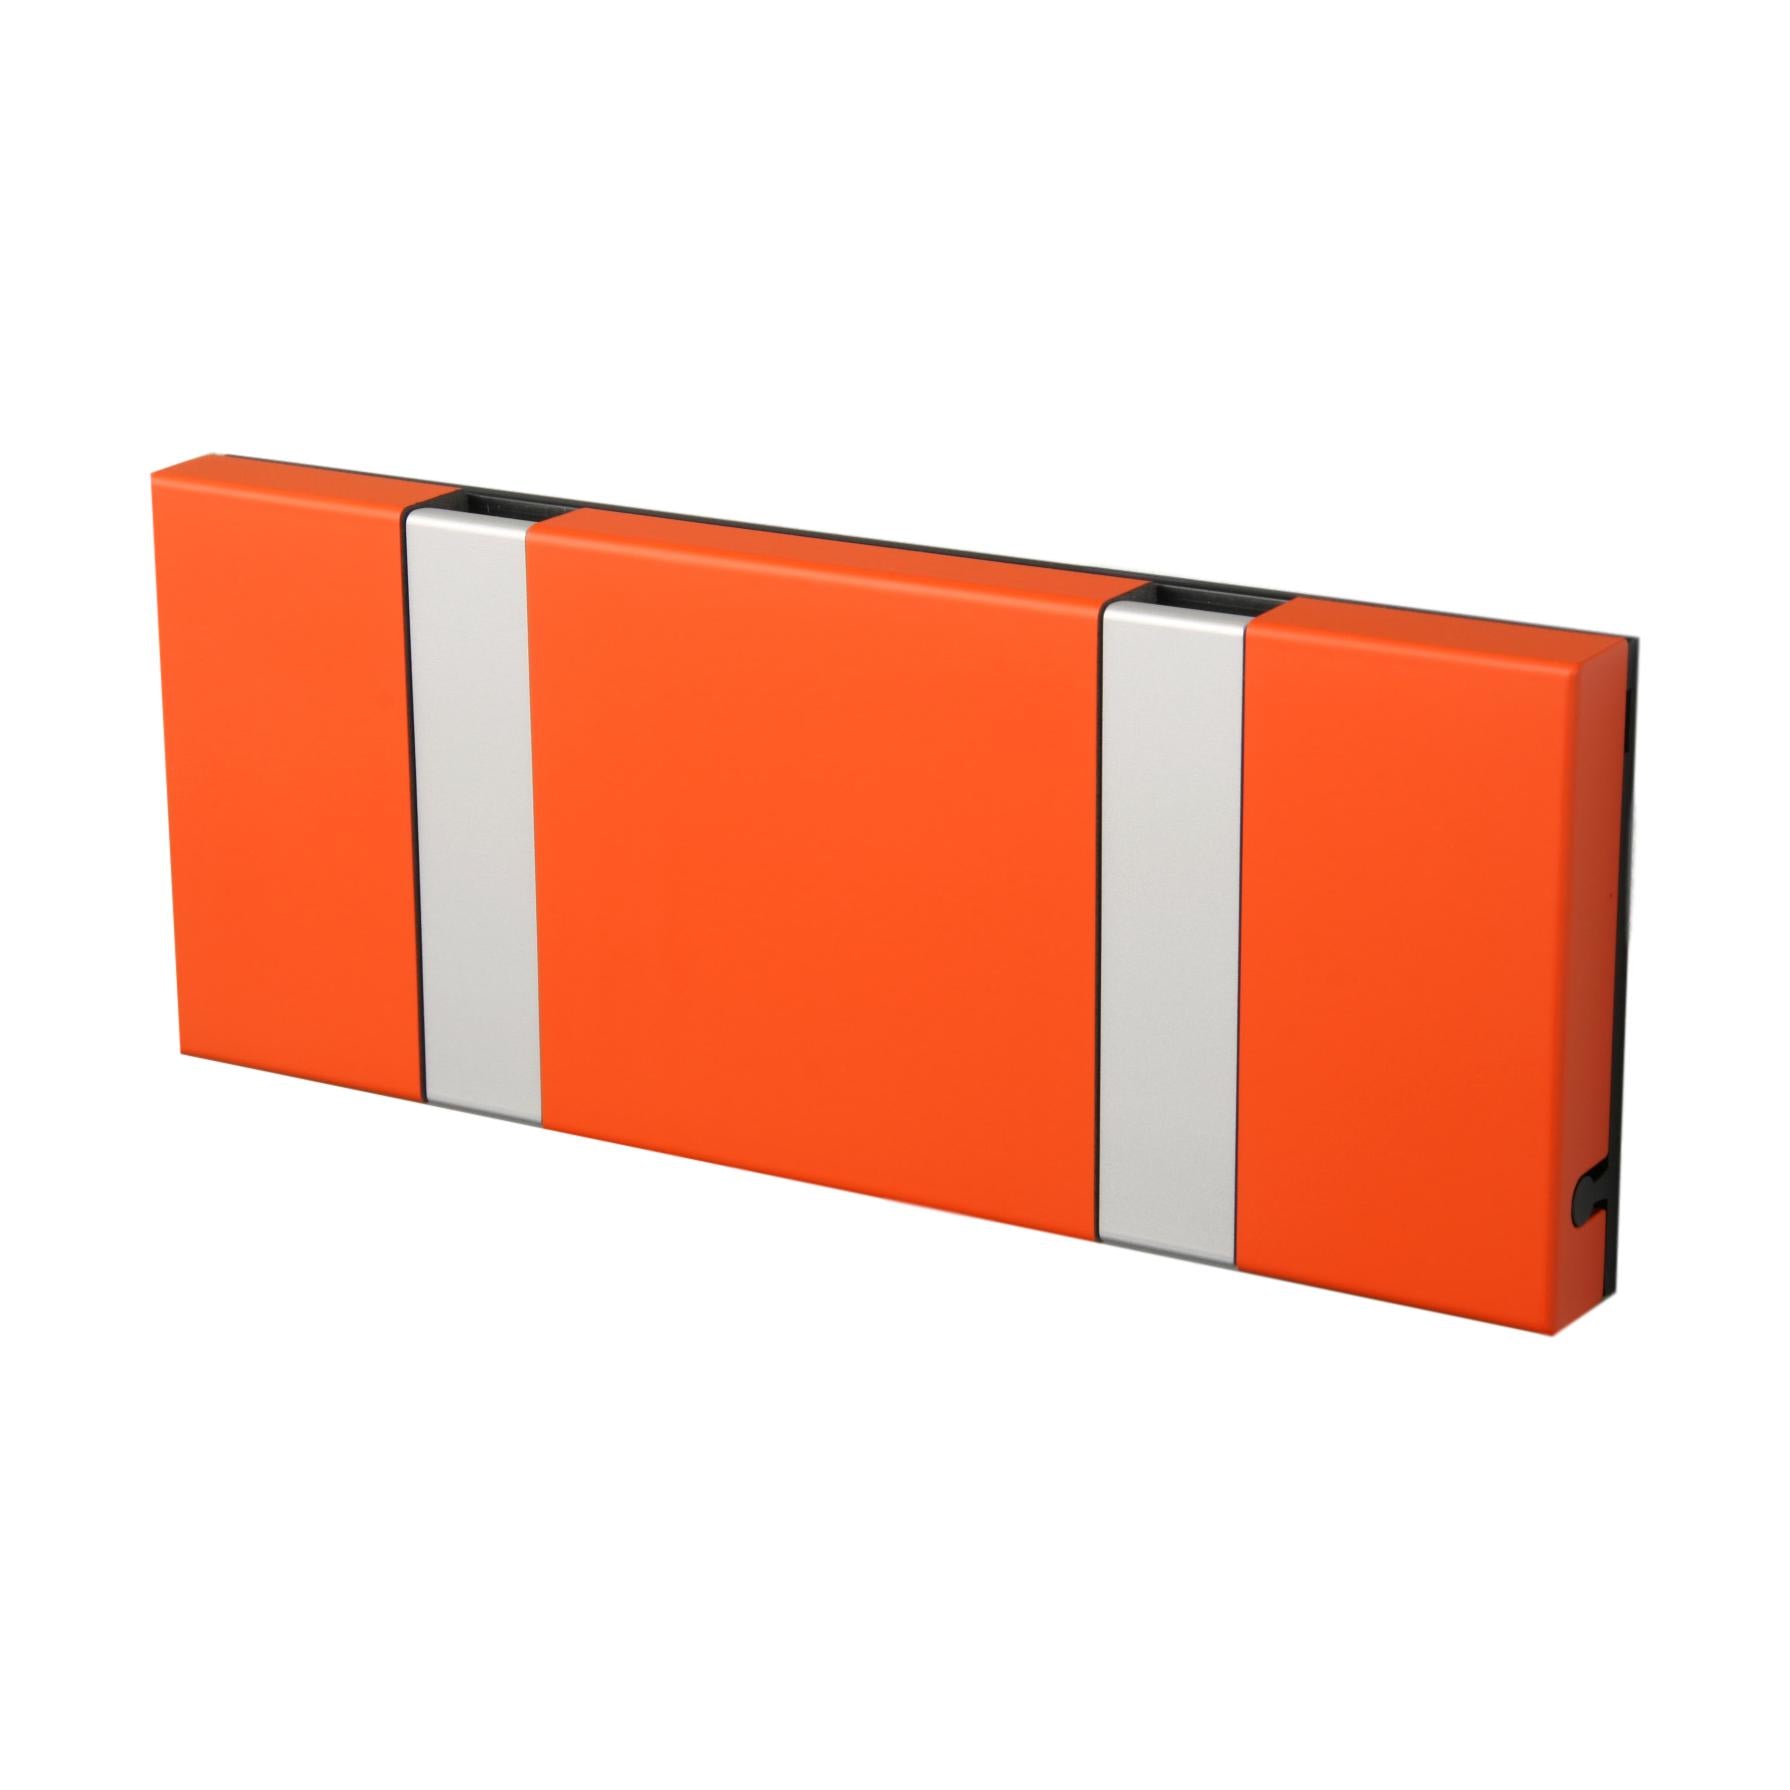 Loca Knax horizontaler Kleiderregal 2 Haken, heißes Orange/Grau